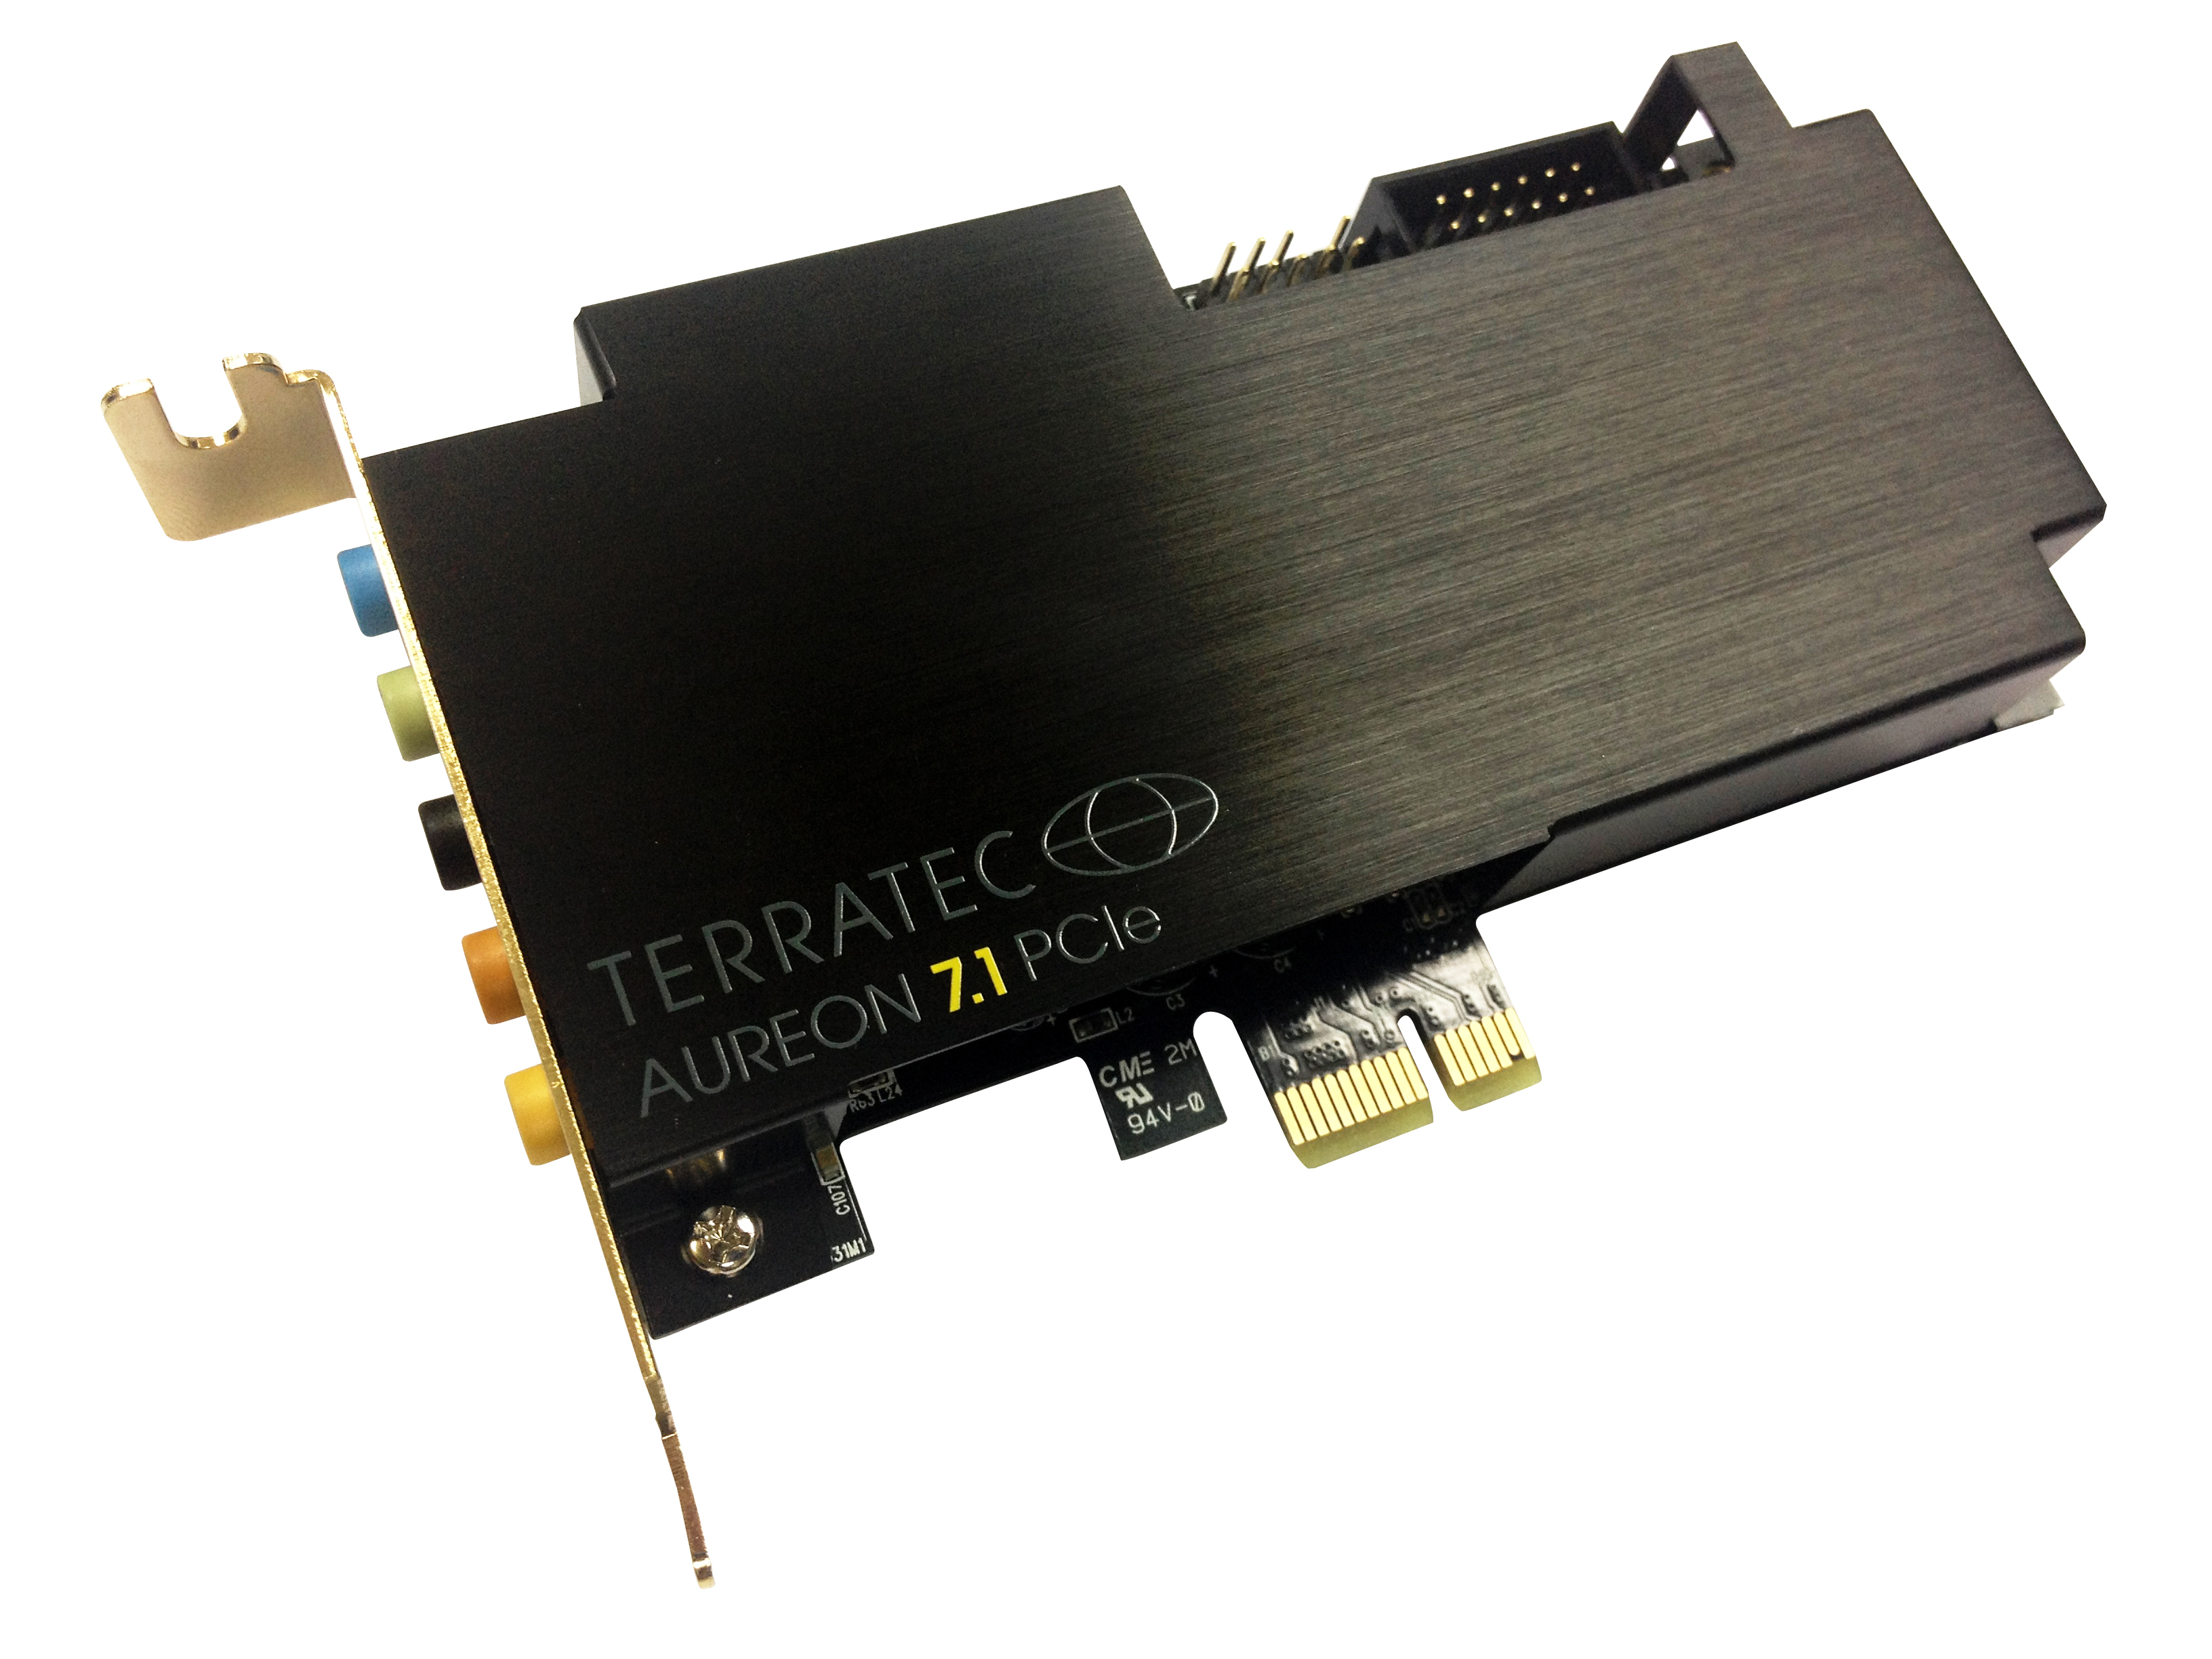 TerraTec Aureon 7.1 PCIe